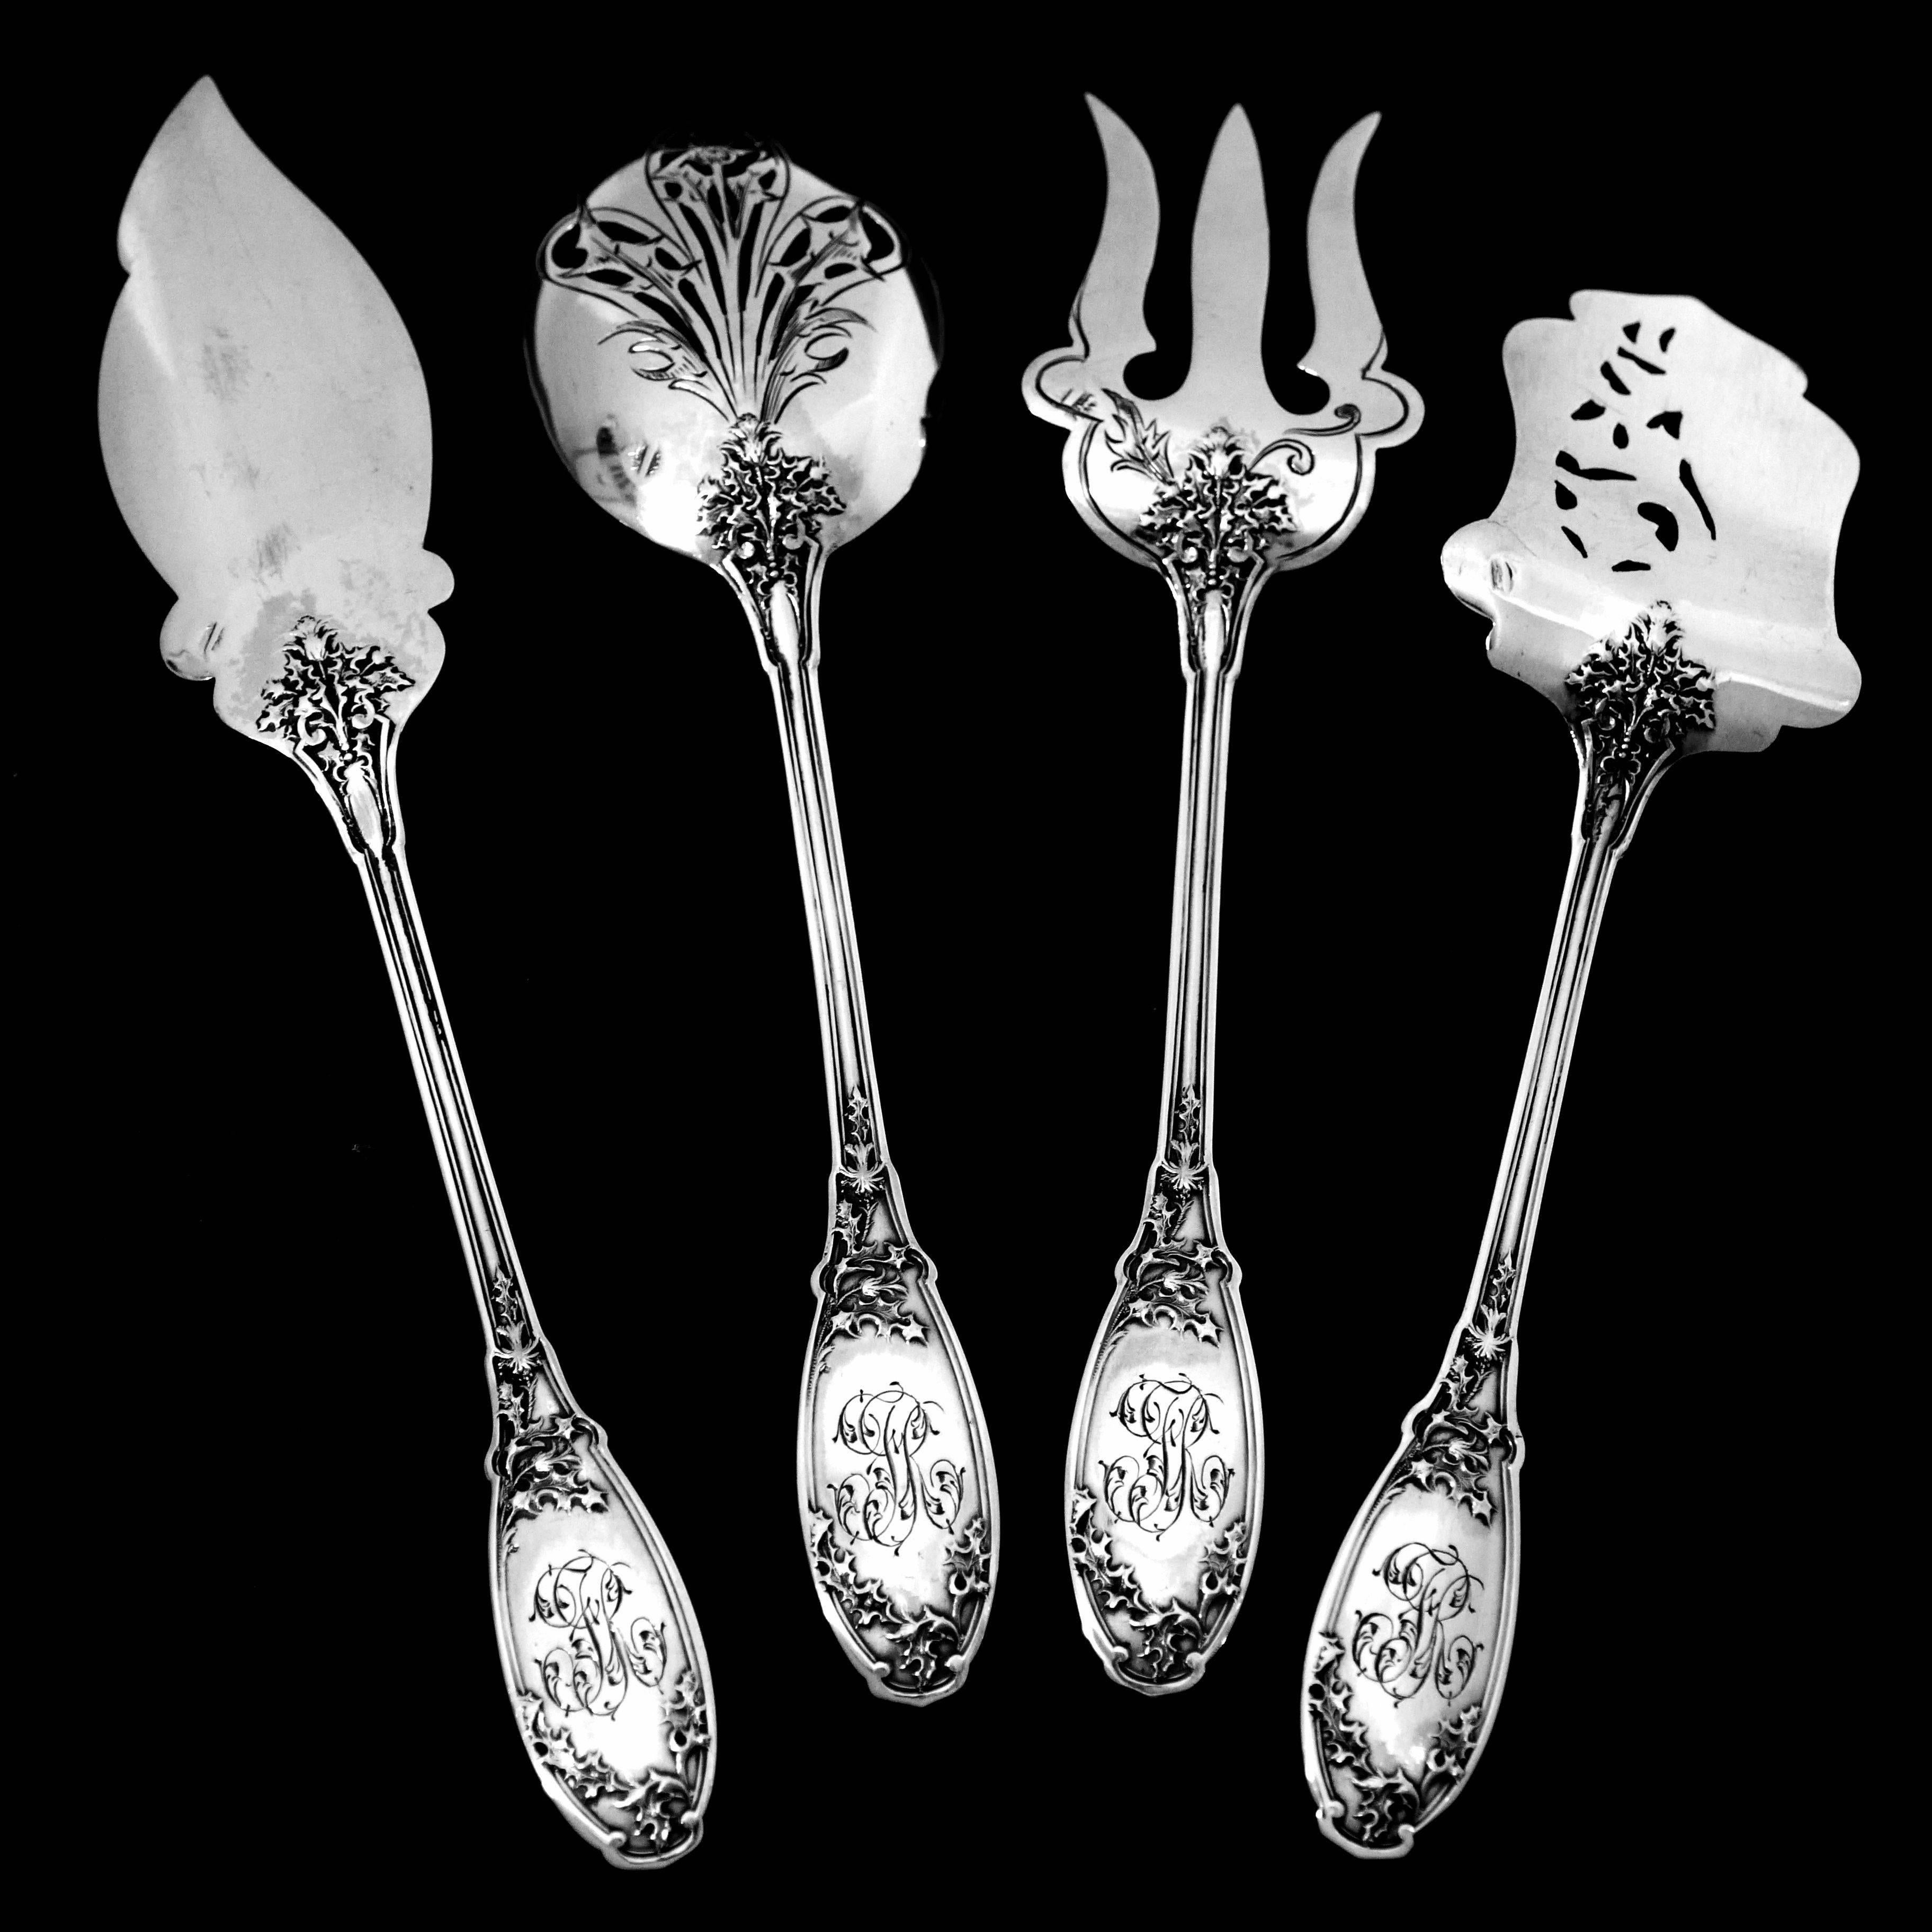 Gabert French Sterling Silver Hors D'oeuvre Dessert Set Four-Piece, Art Nouveau 7